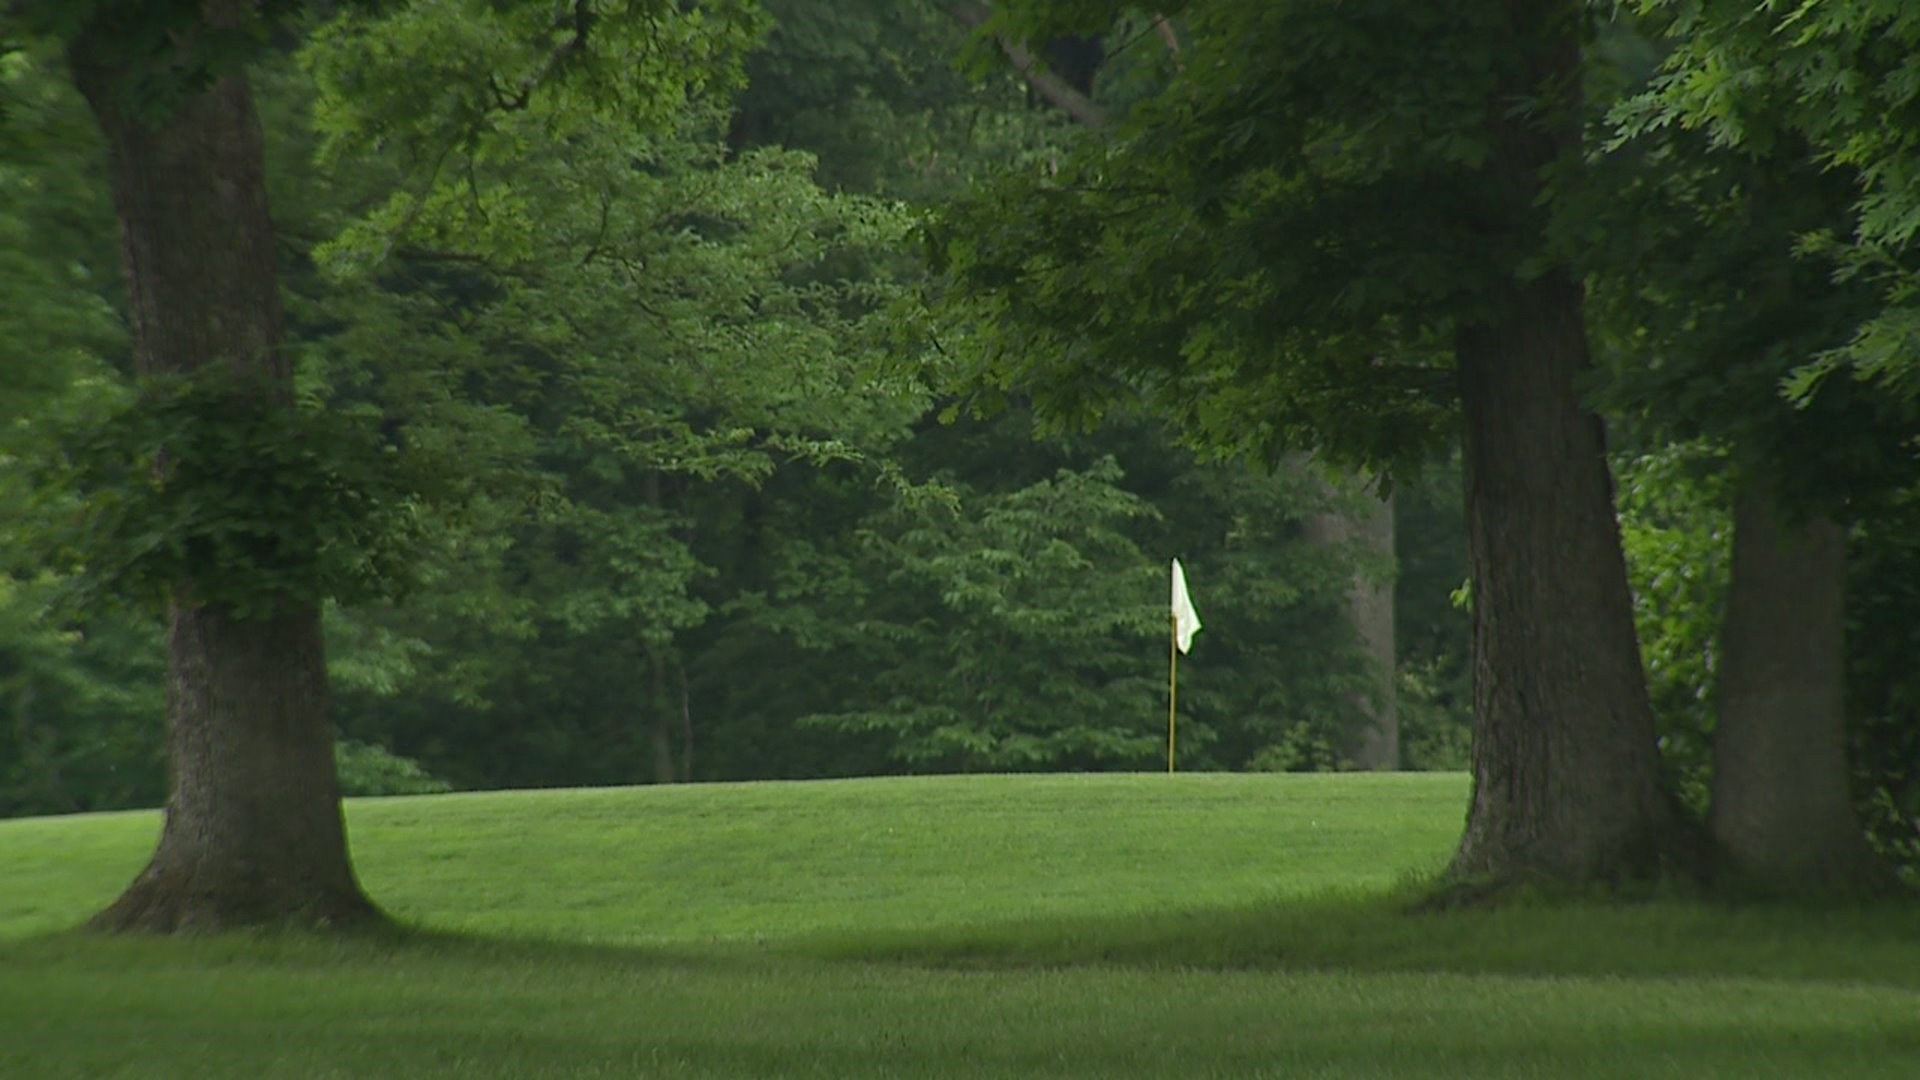 Golf Deals: Saukie Golf Course in Rock Island is an old gem